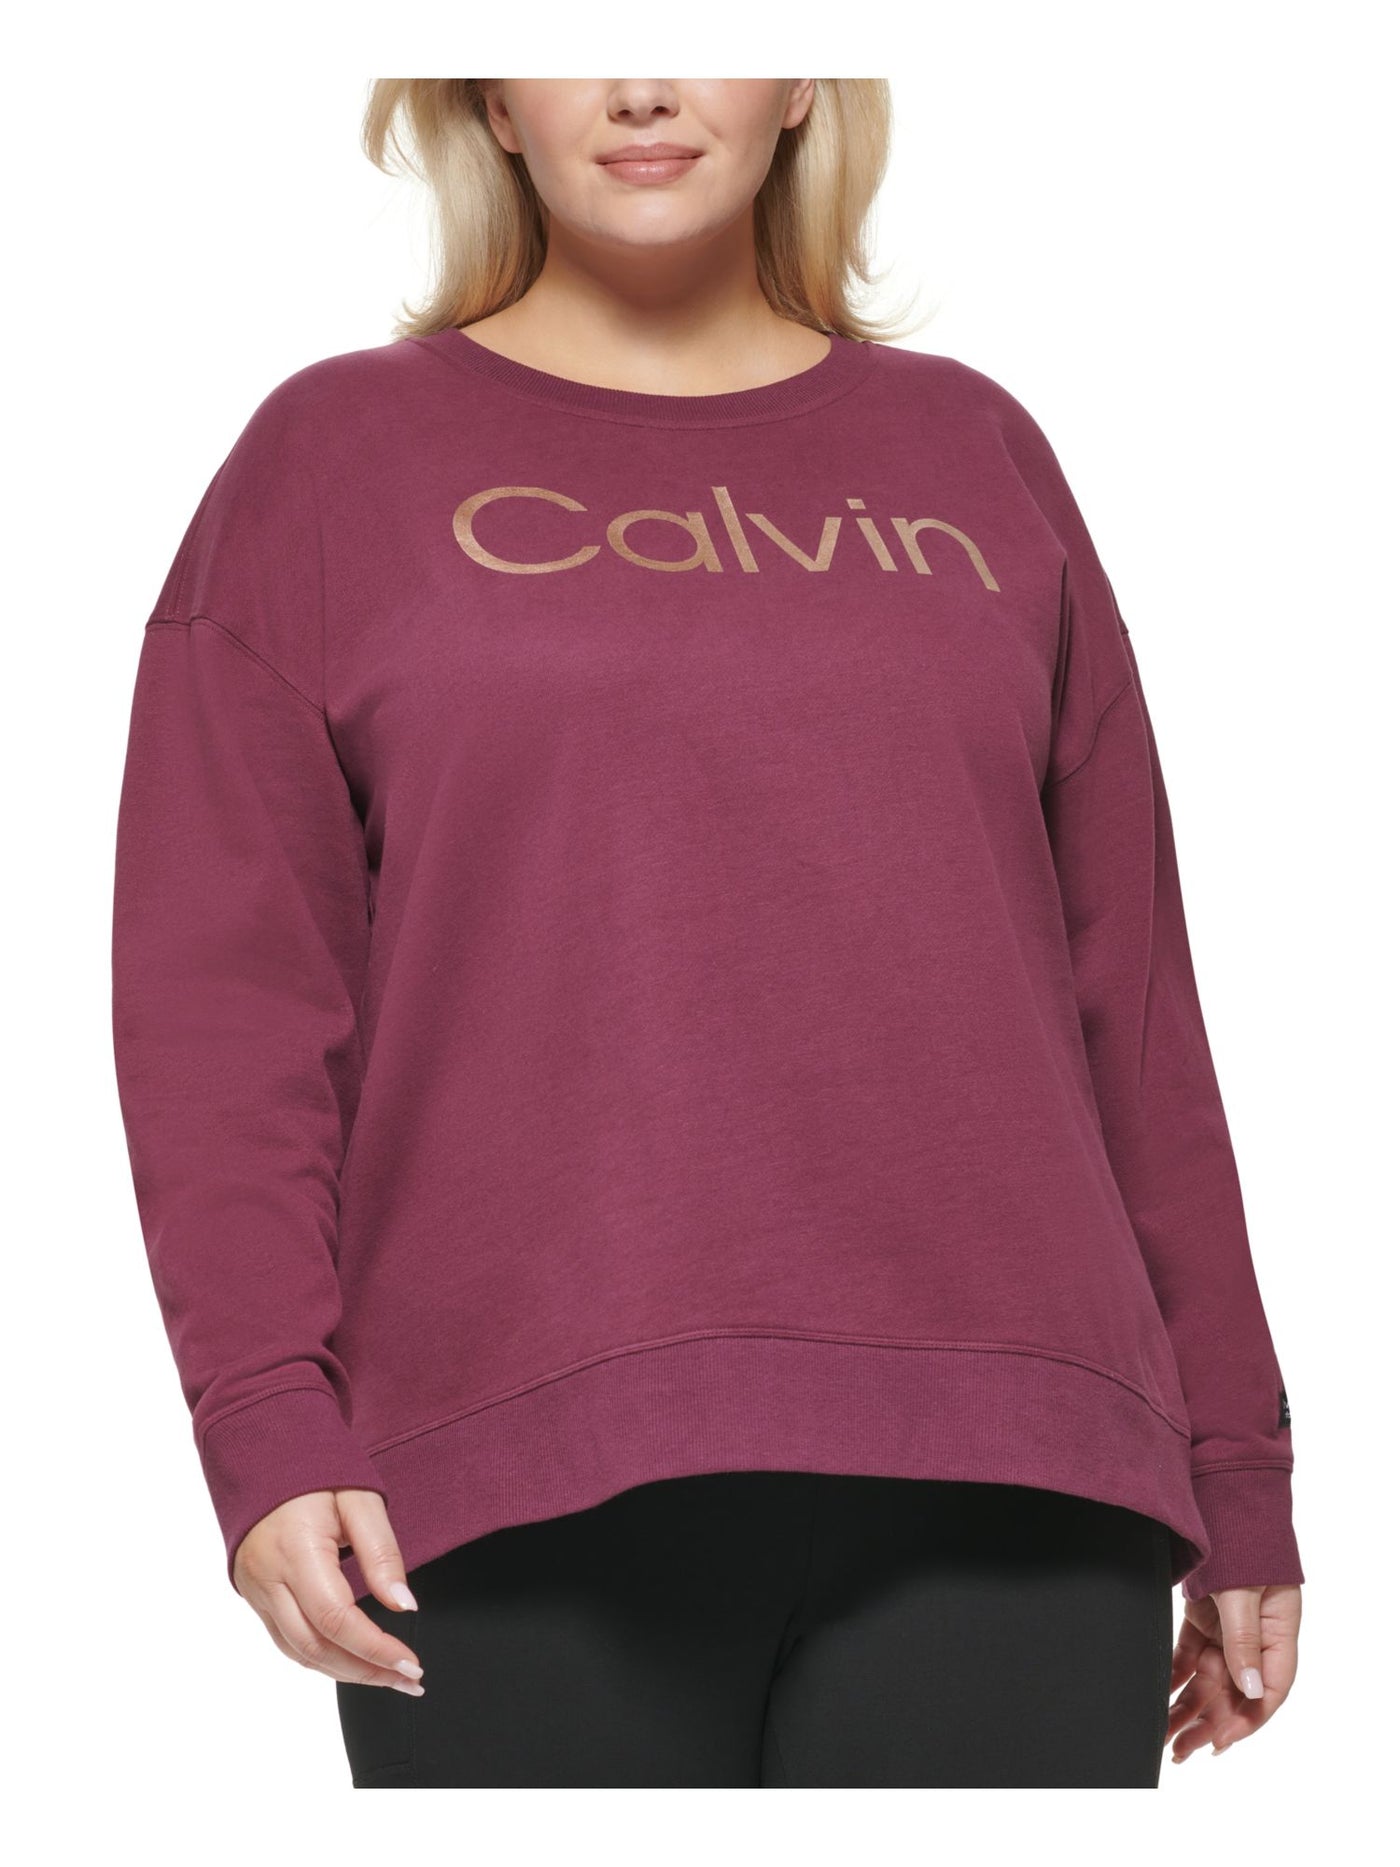 CALVIN KLEIN Womens Burgundy Fleece Logo Graphic Sweatshirt Plus 2X